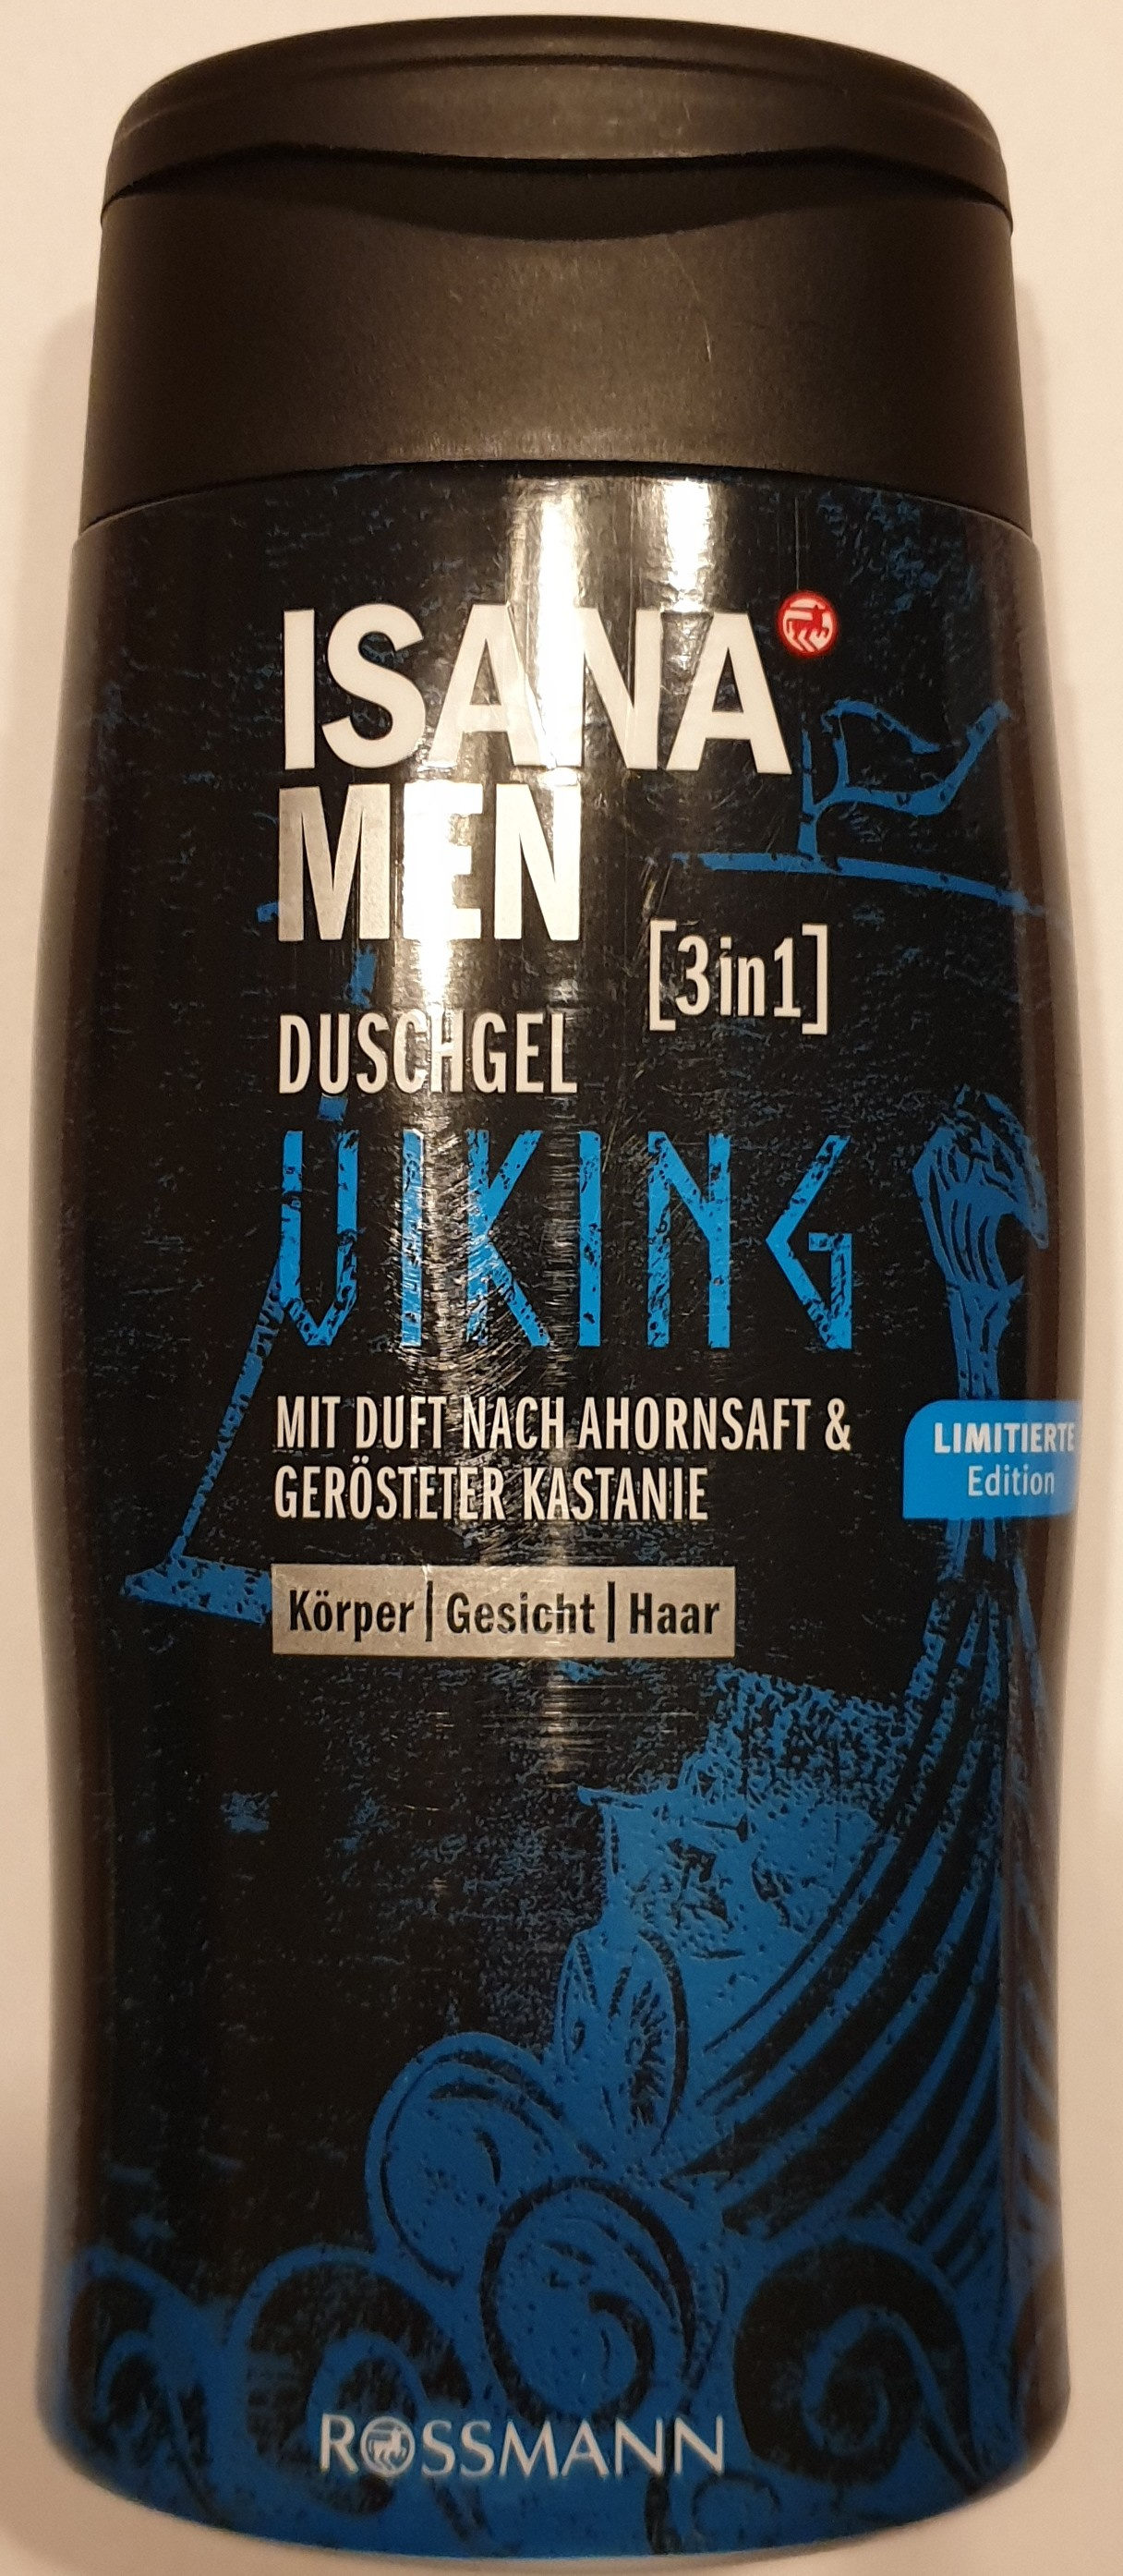 Duschgel viking [3in1] - Produit - de